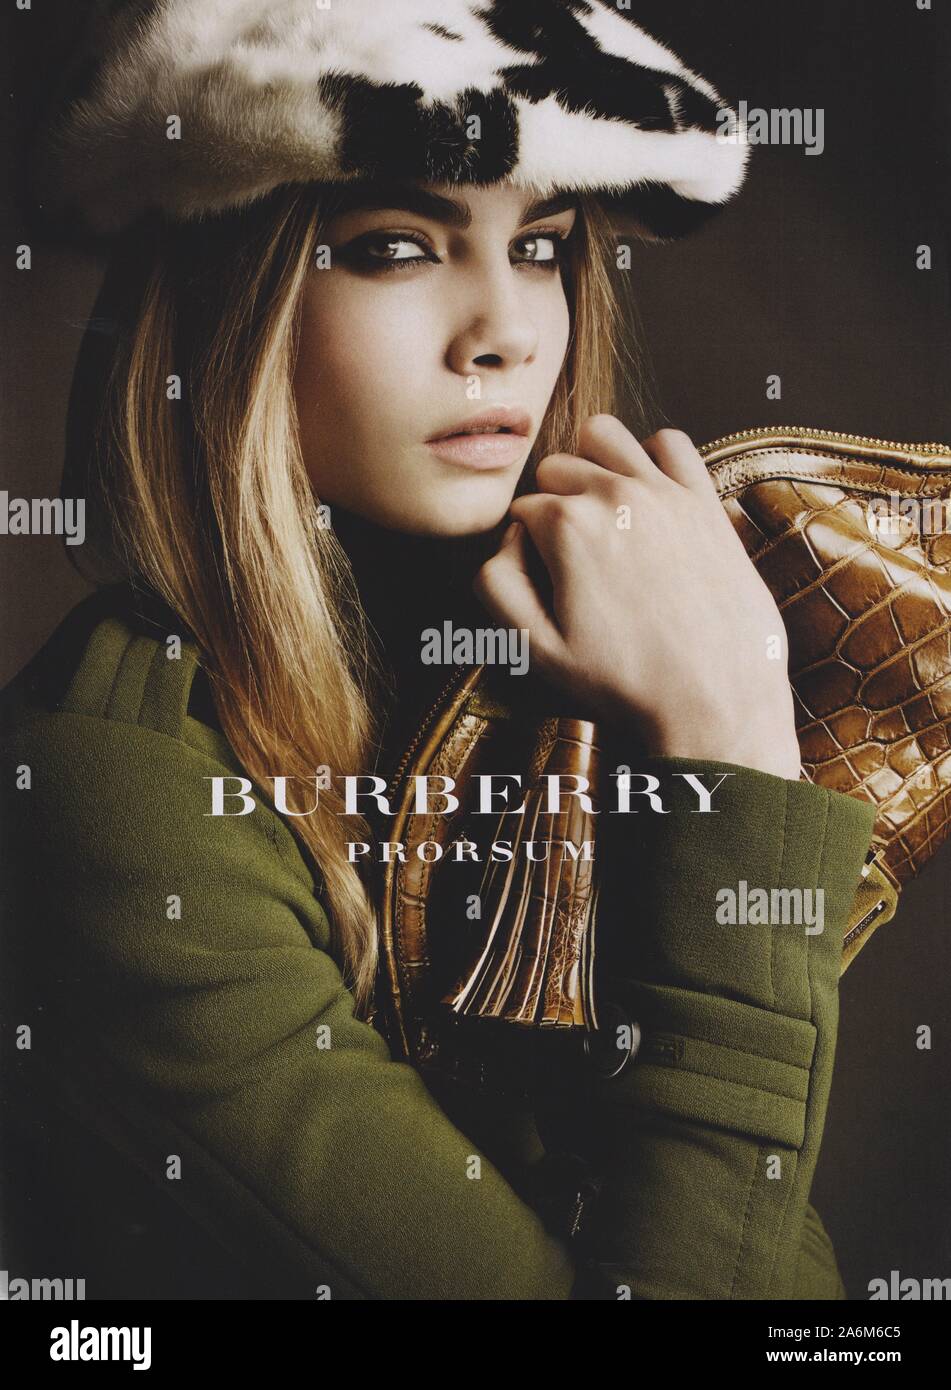 Burberry advertisement fotografías e imágenes de alta resolución - Alamy